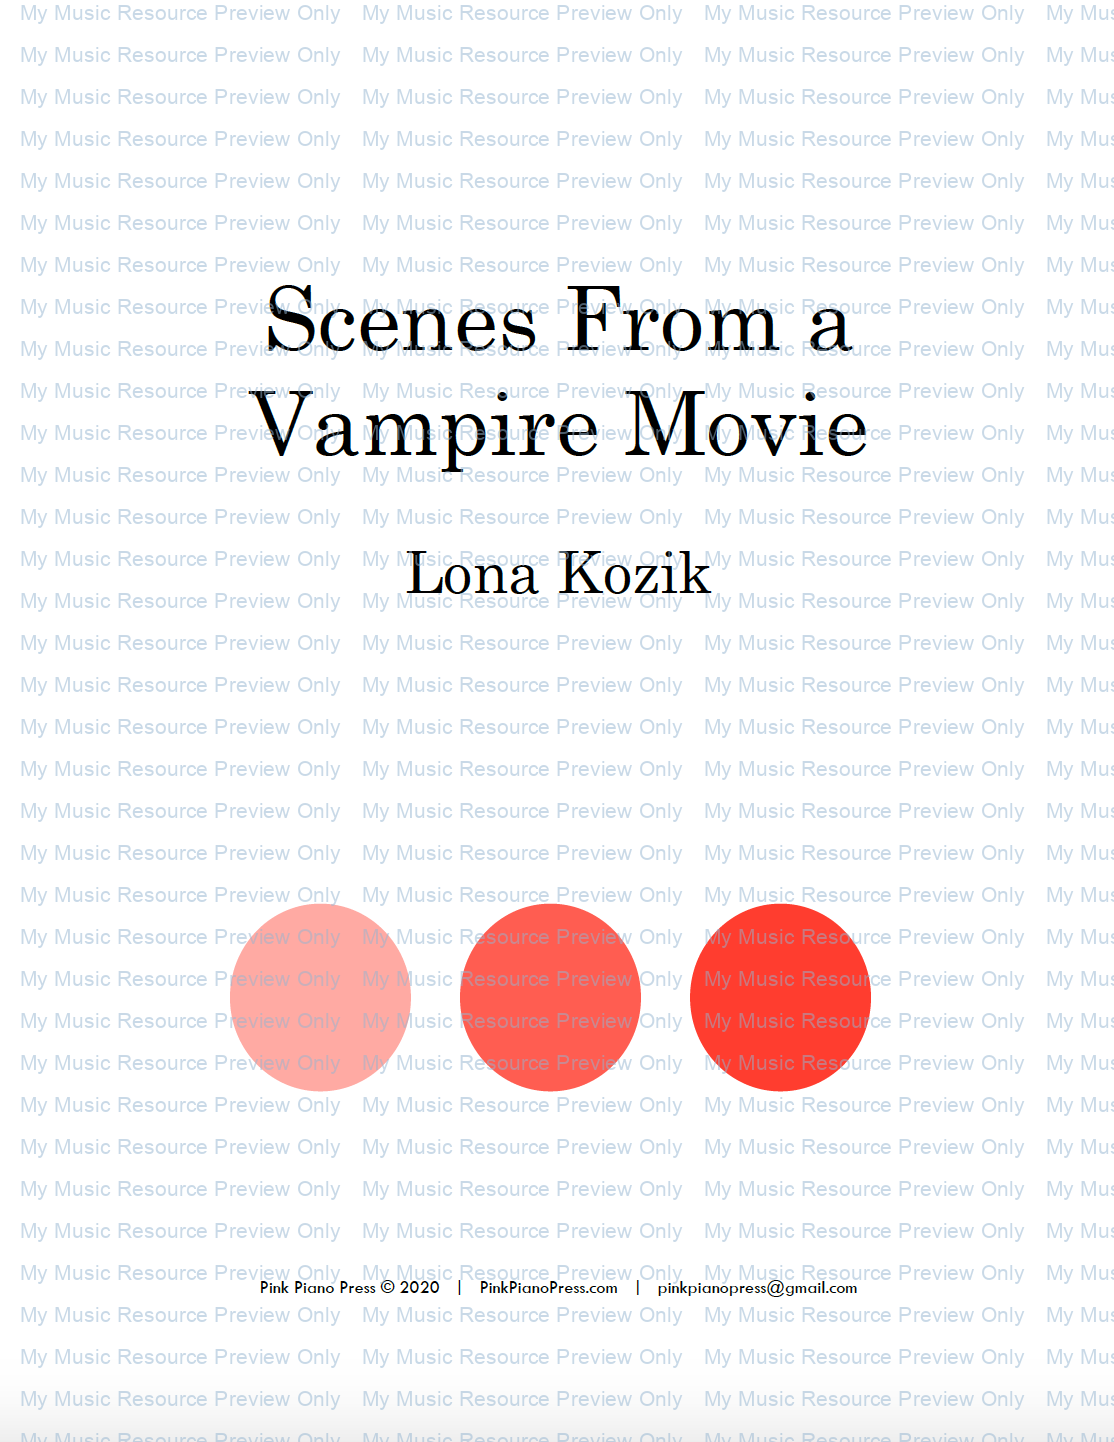 Scenes from a Vampire Movie by Lona Kozik